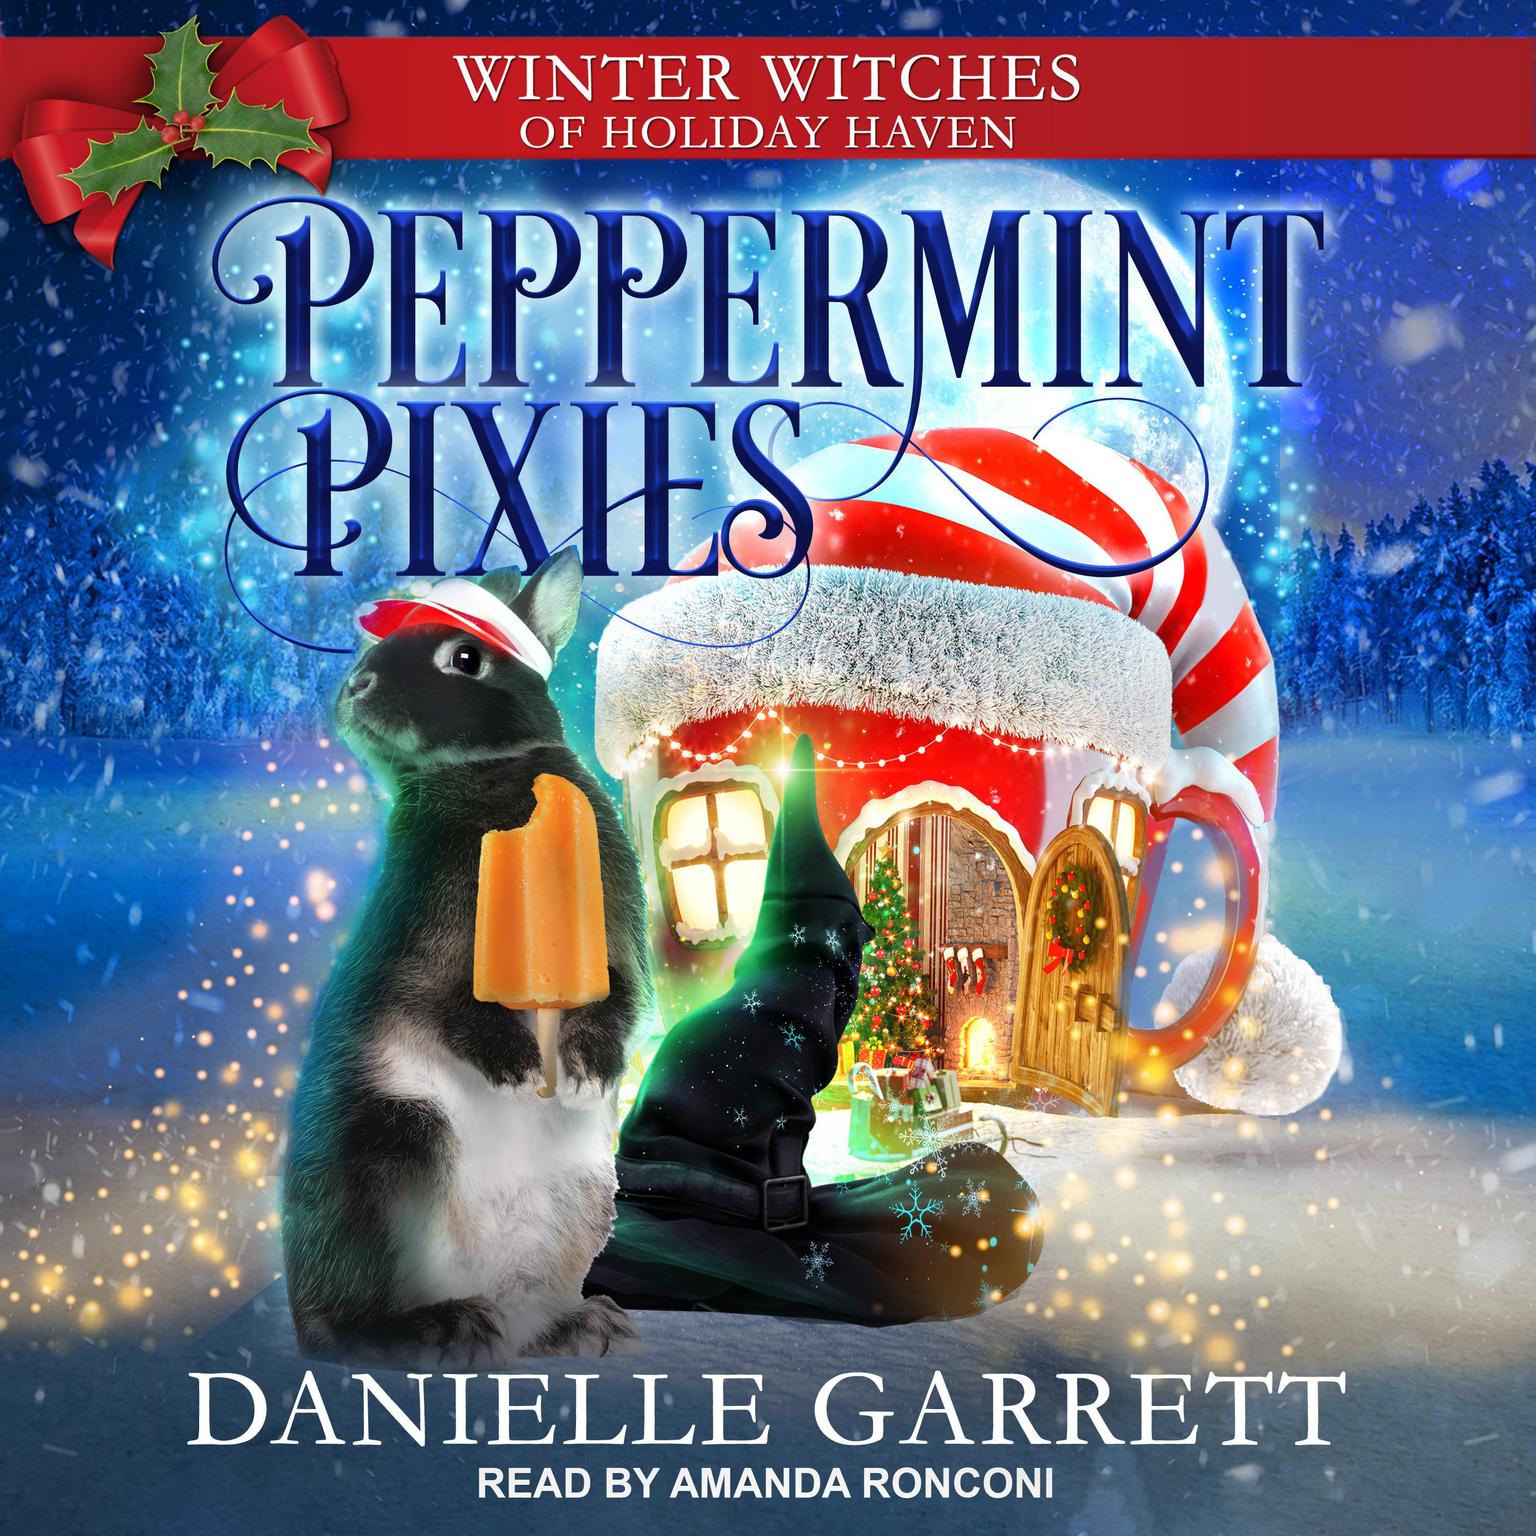 Peppermint Pixies Audiobook, by Danielle Garrett